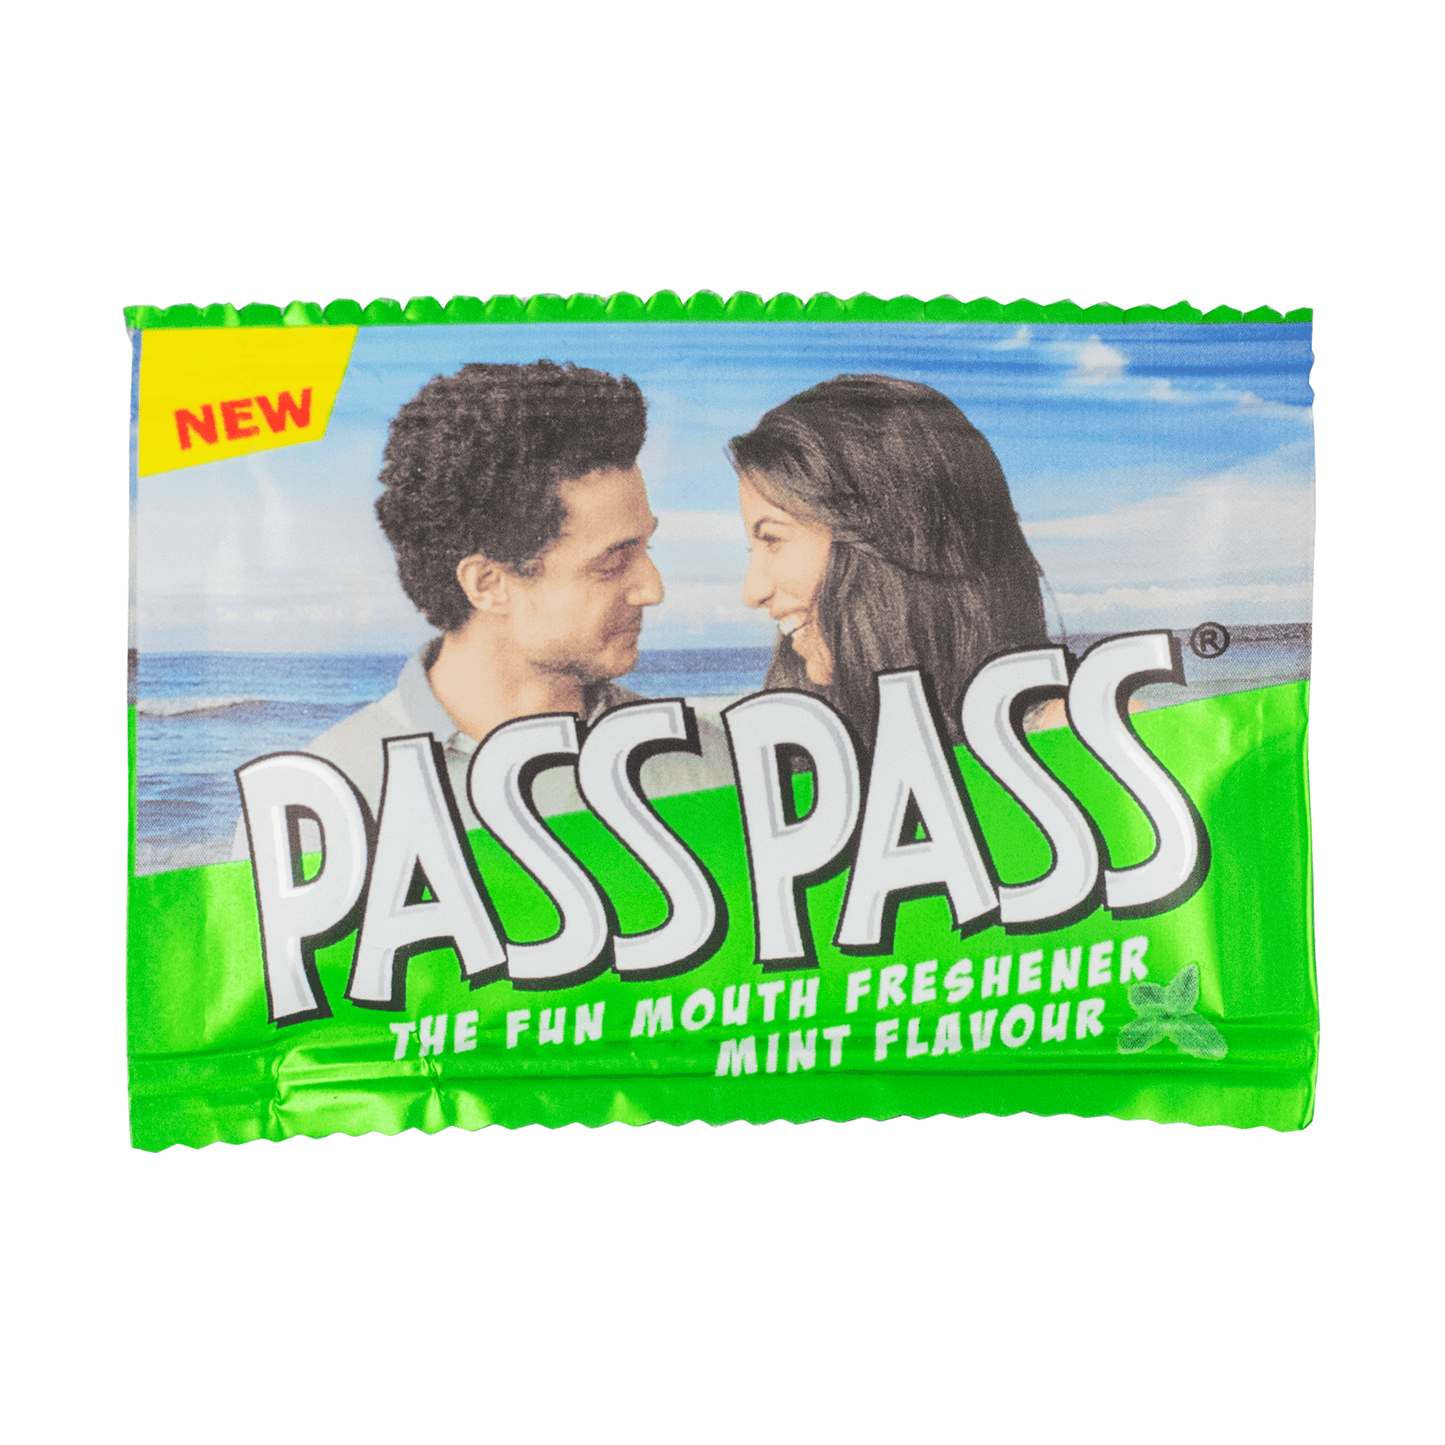 Pass Pass Mouth Freshner